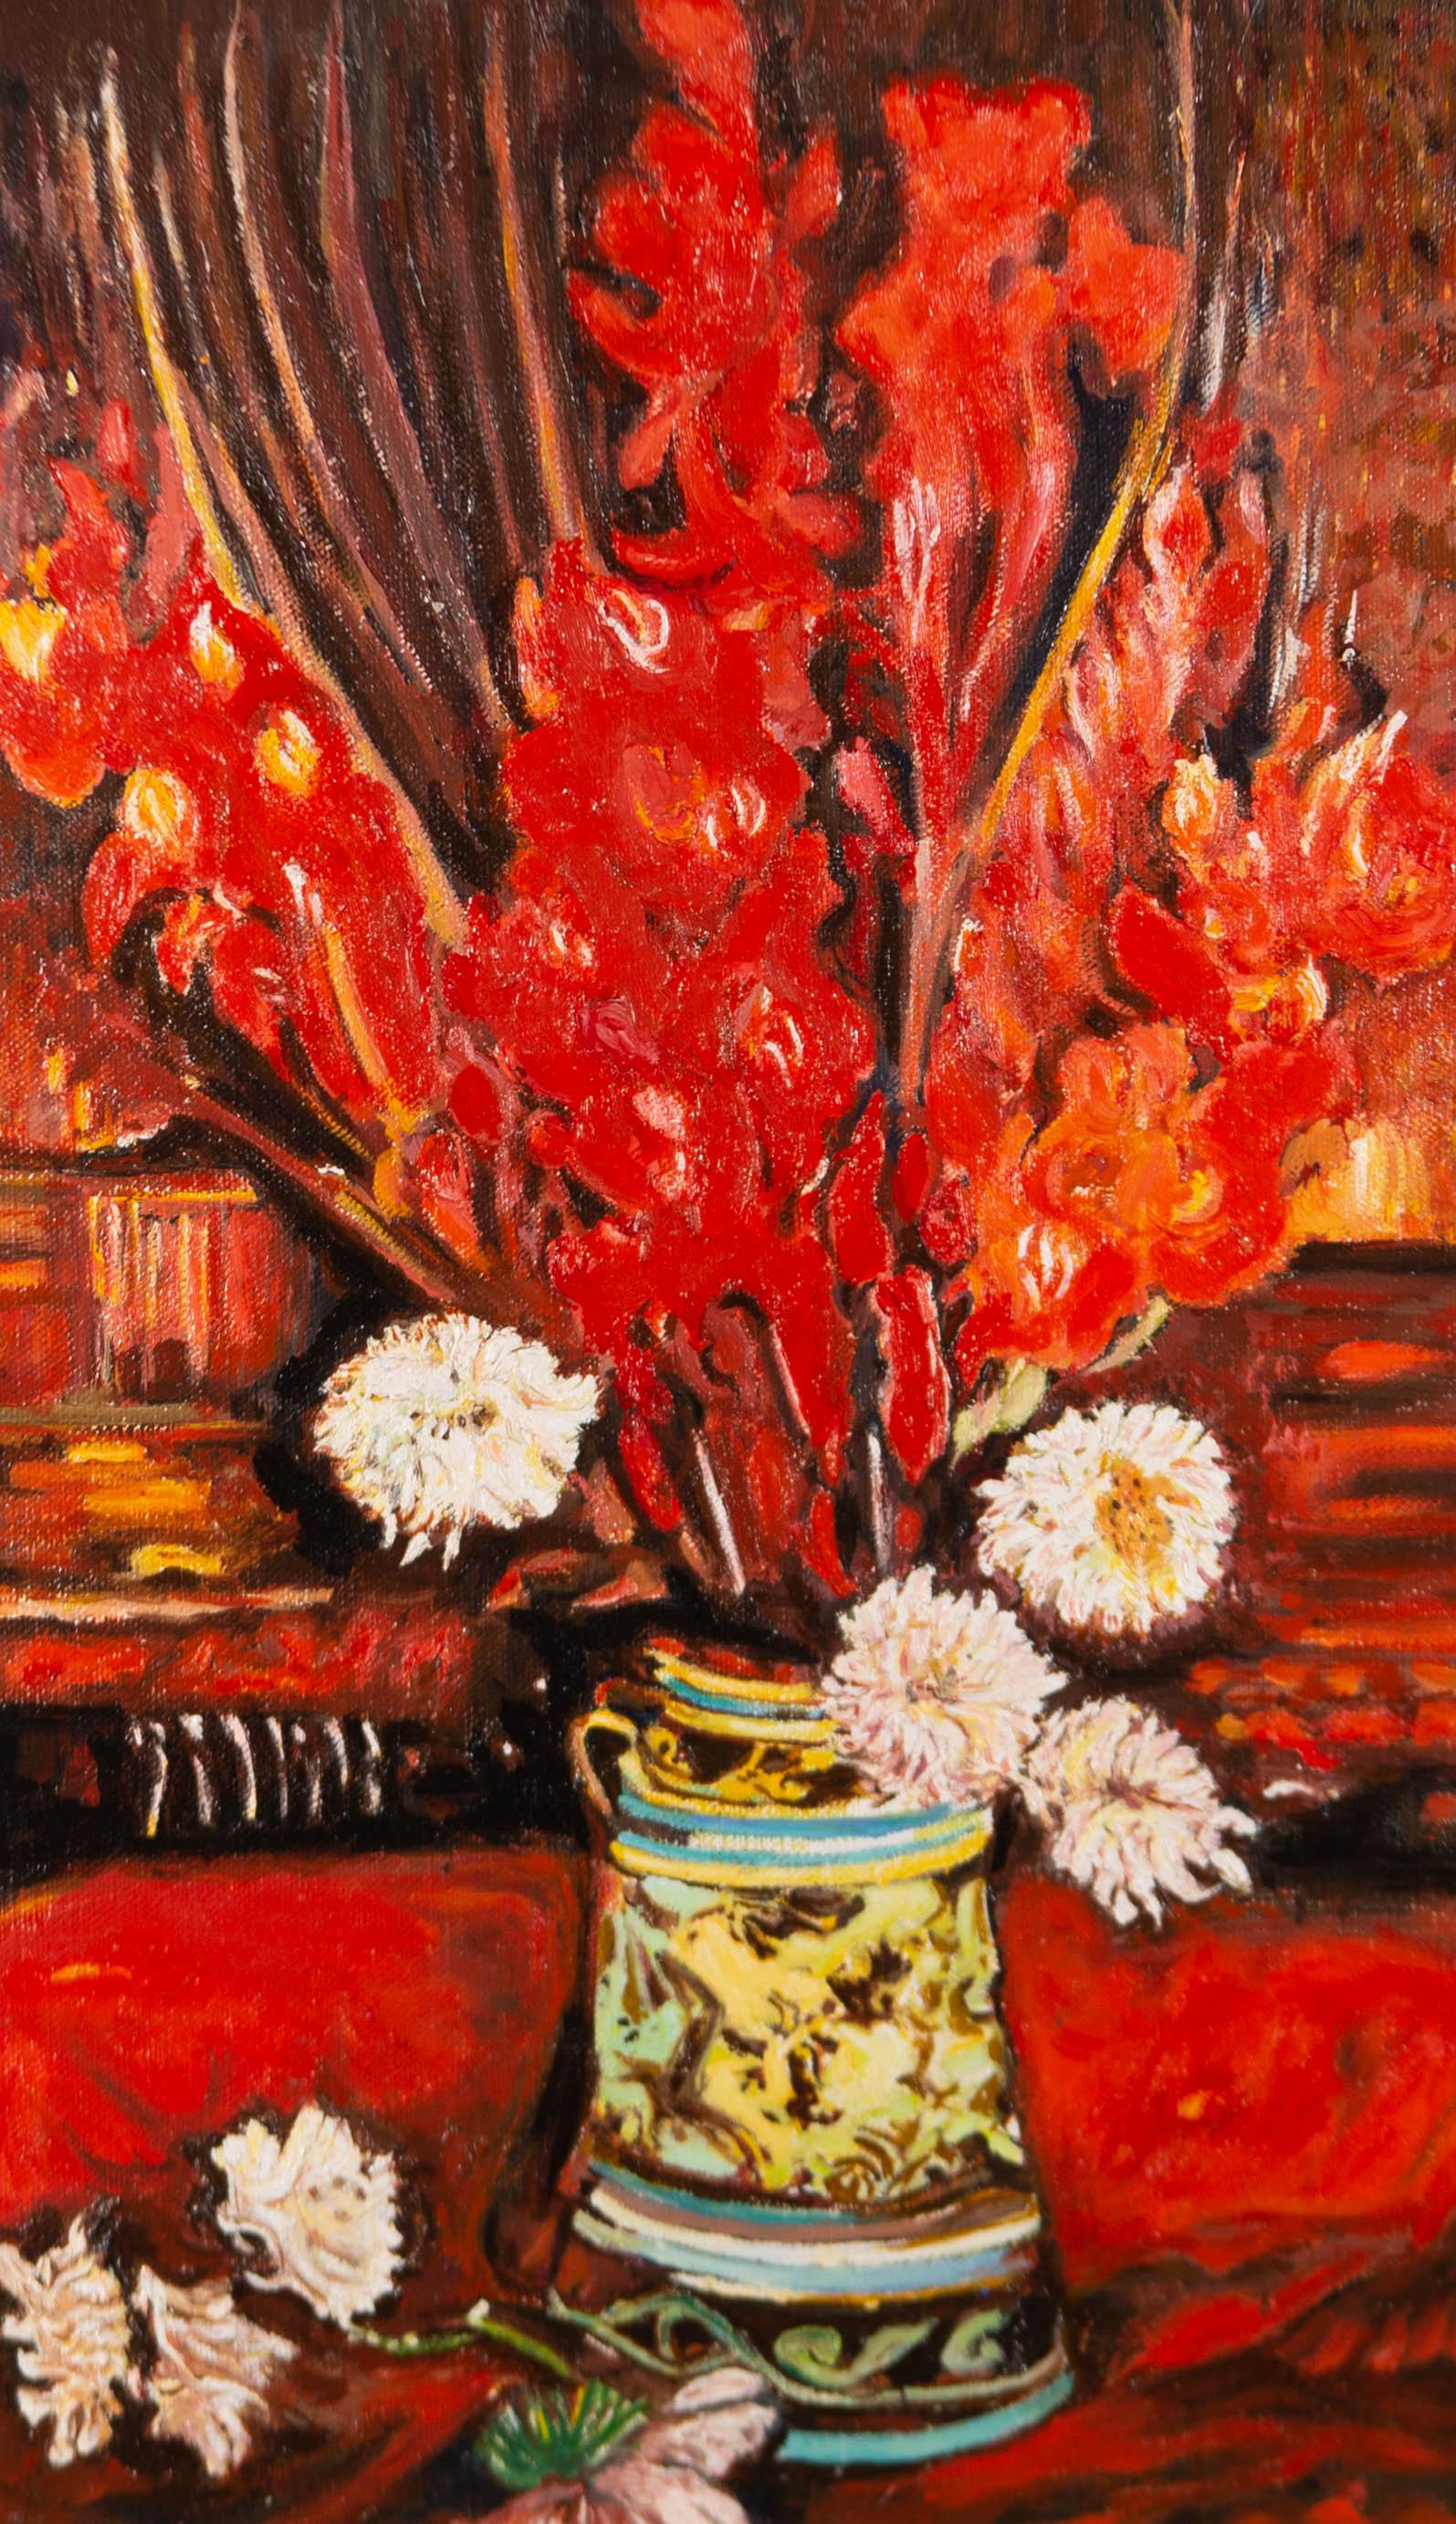 Still-Life Painting Lewis MacLeod After Van Gough - Lewis MacLeod d'après Van Gough - 2003 Huile, vase avec Gladioli rouge